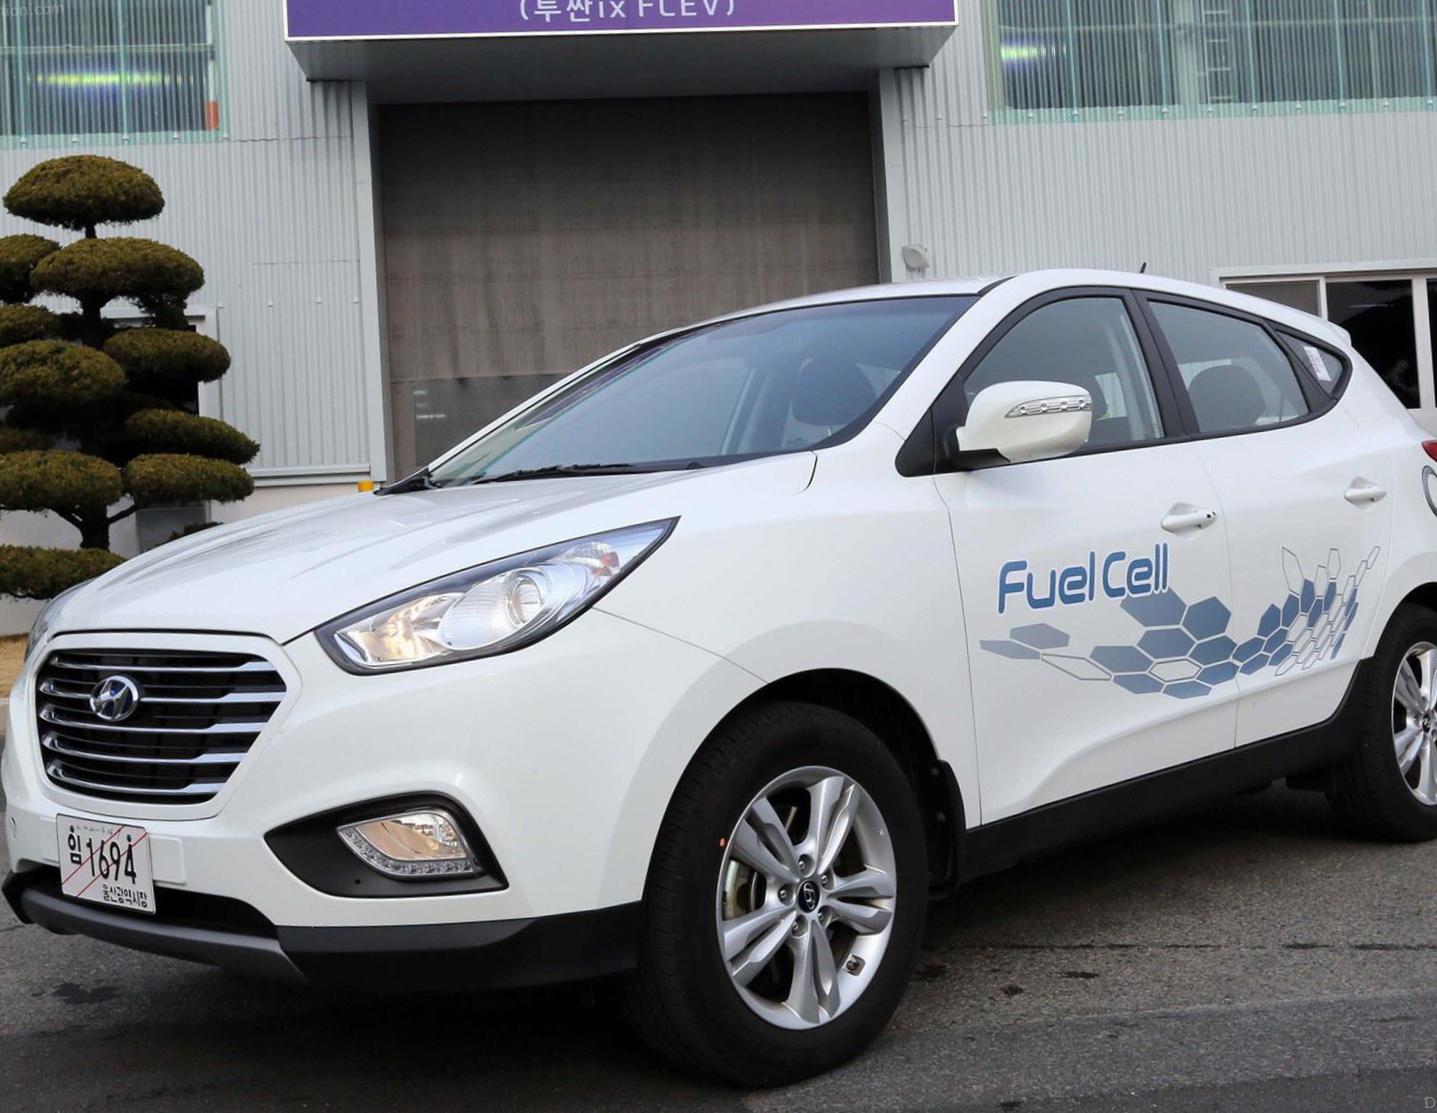 ix35 Fuel Cell Hyundai for sale 2014